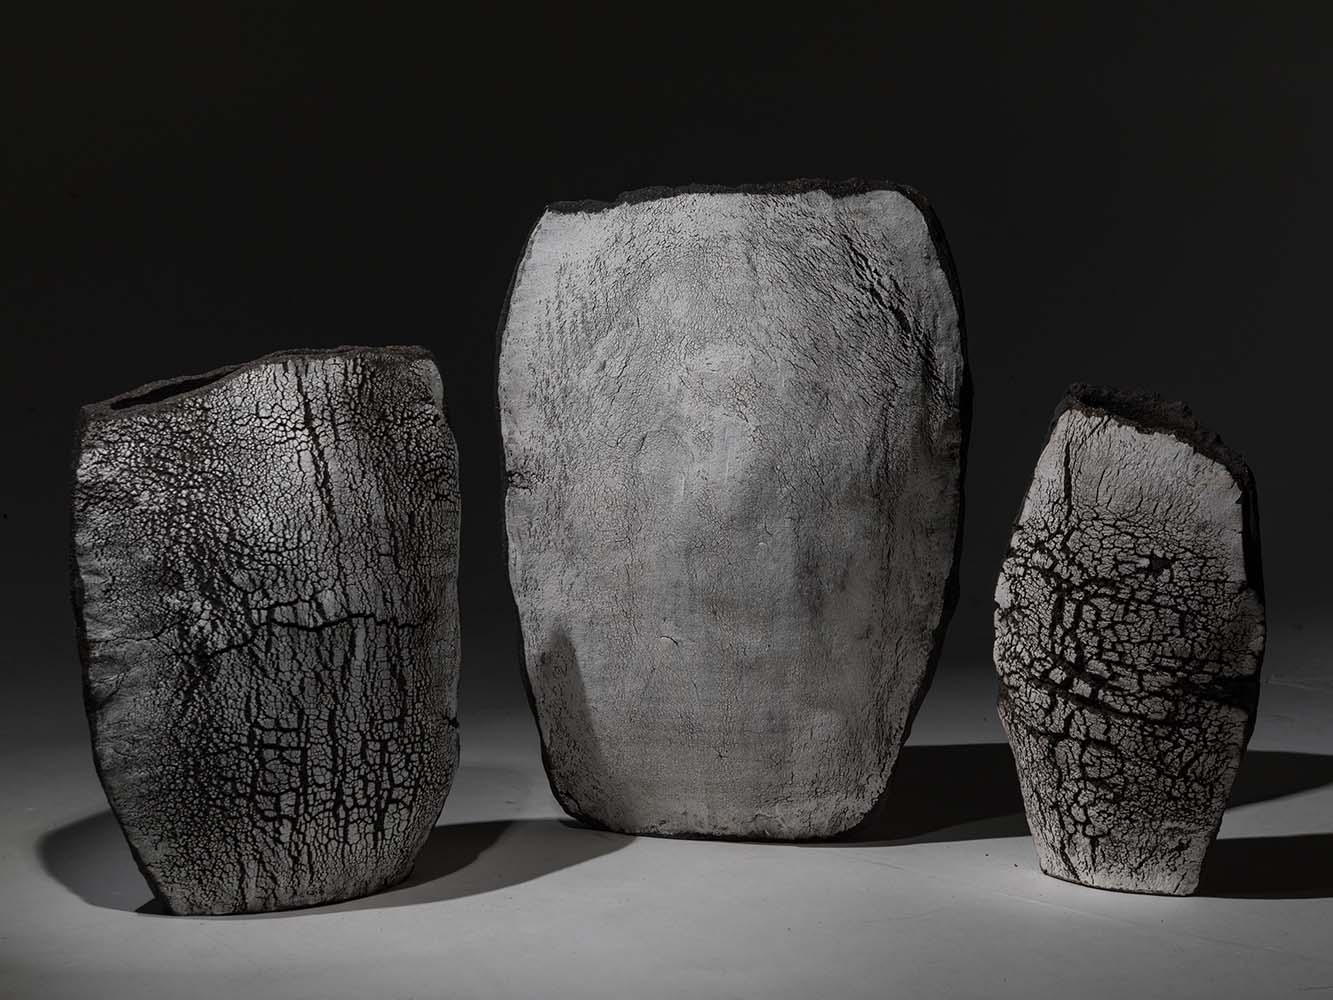 Three ceramic vases shown in black and white